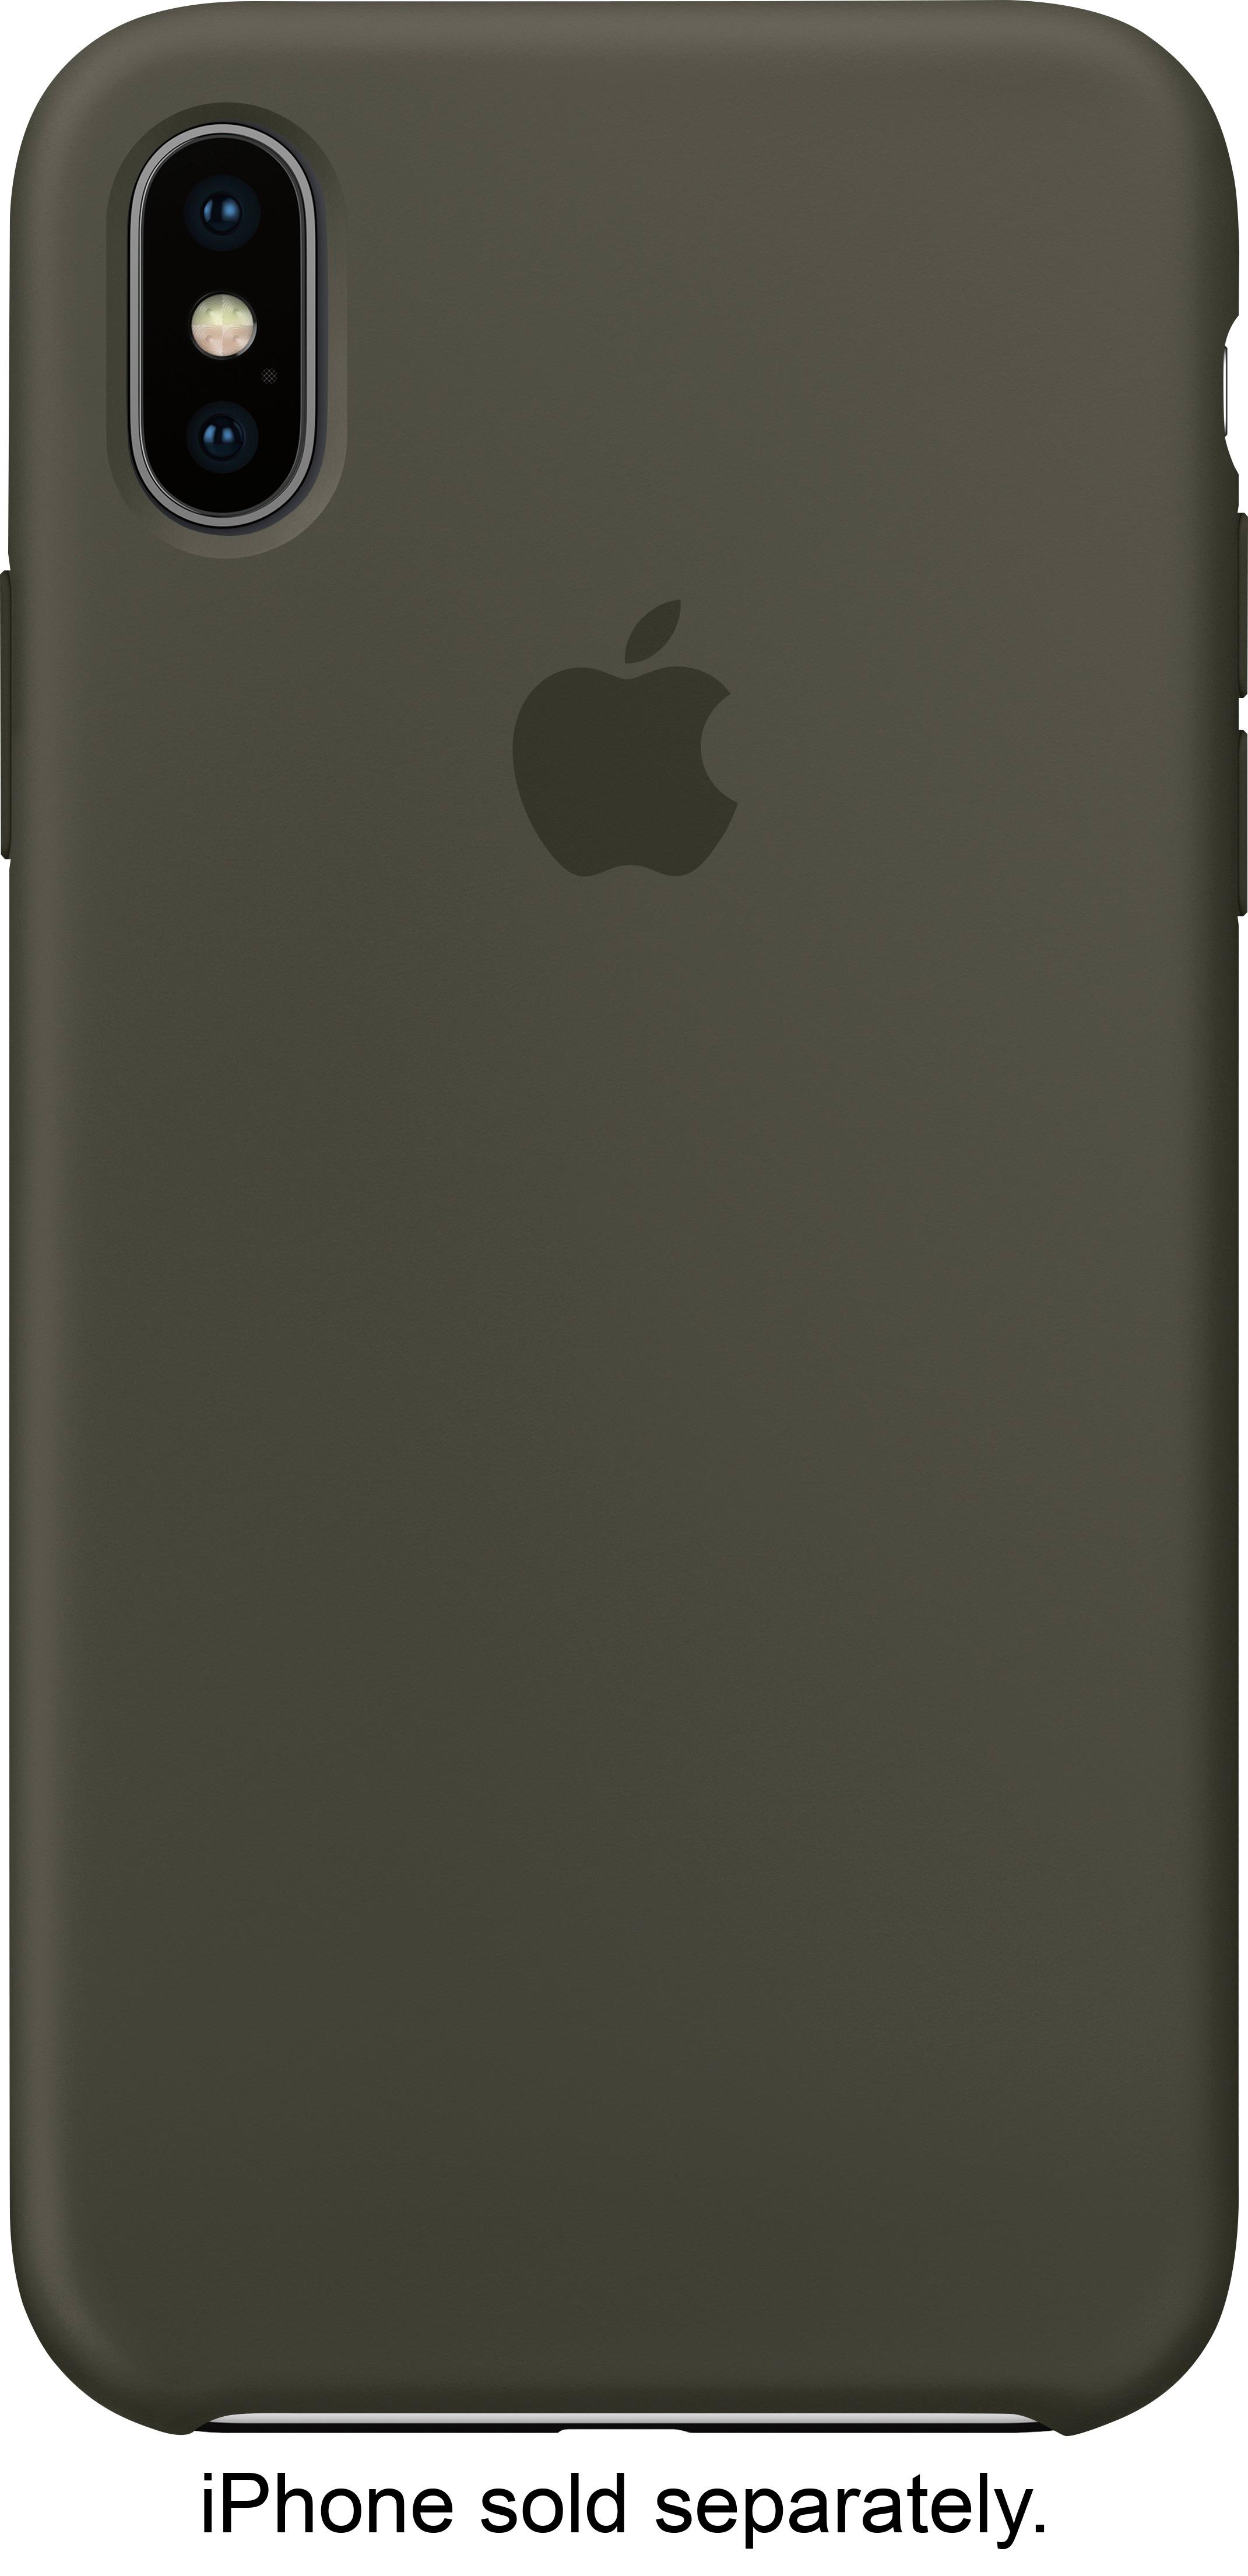 Emuleren D.w.z tolerantie Apple iPhone® X Silicone Case Dark Olive MR522ZM/A - Best Buy